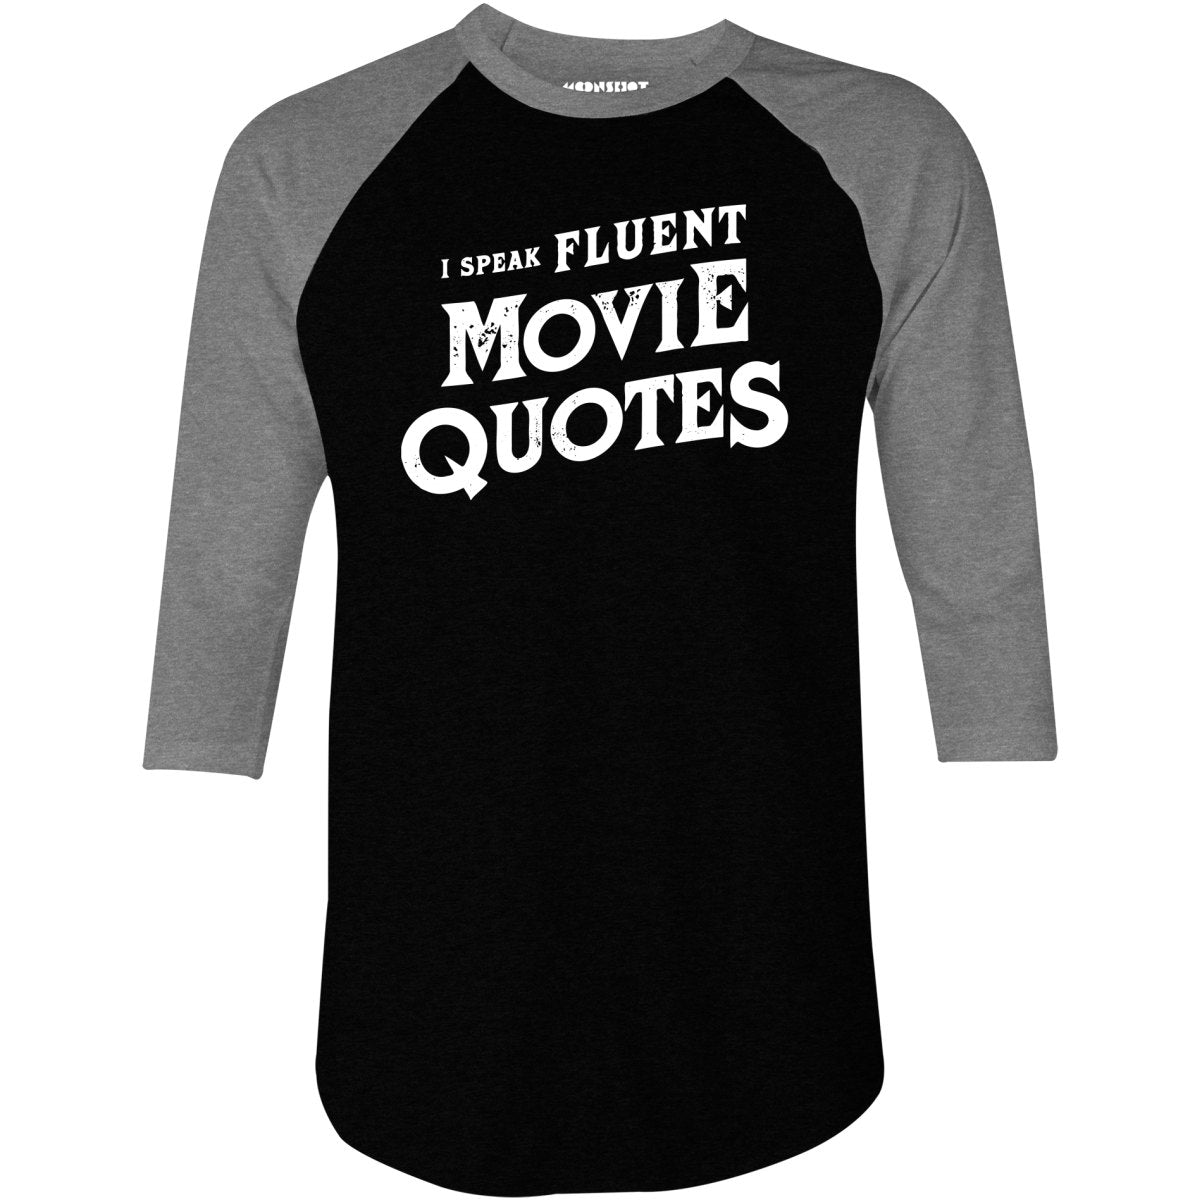 I Speak Fluent Movie Quotes - 3/4 Sleeve Raglan T-Shirt